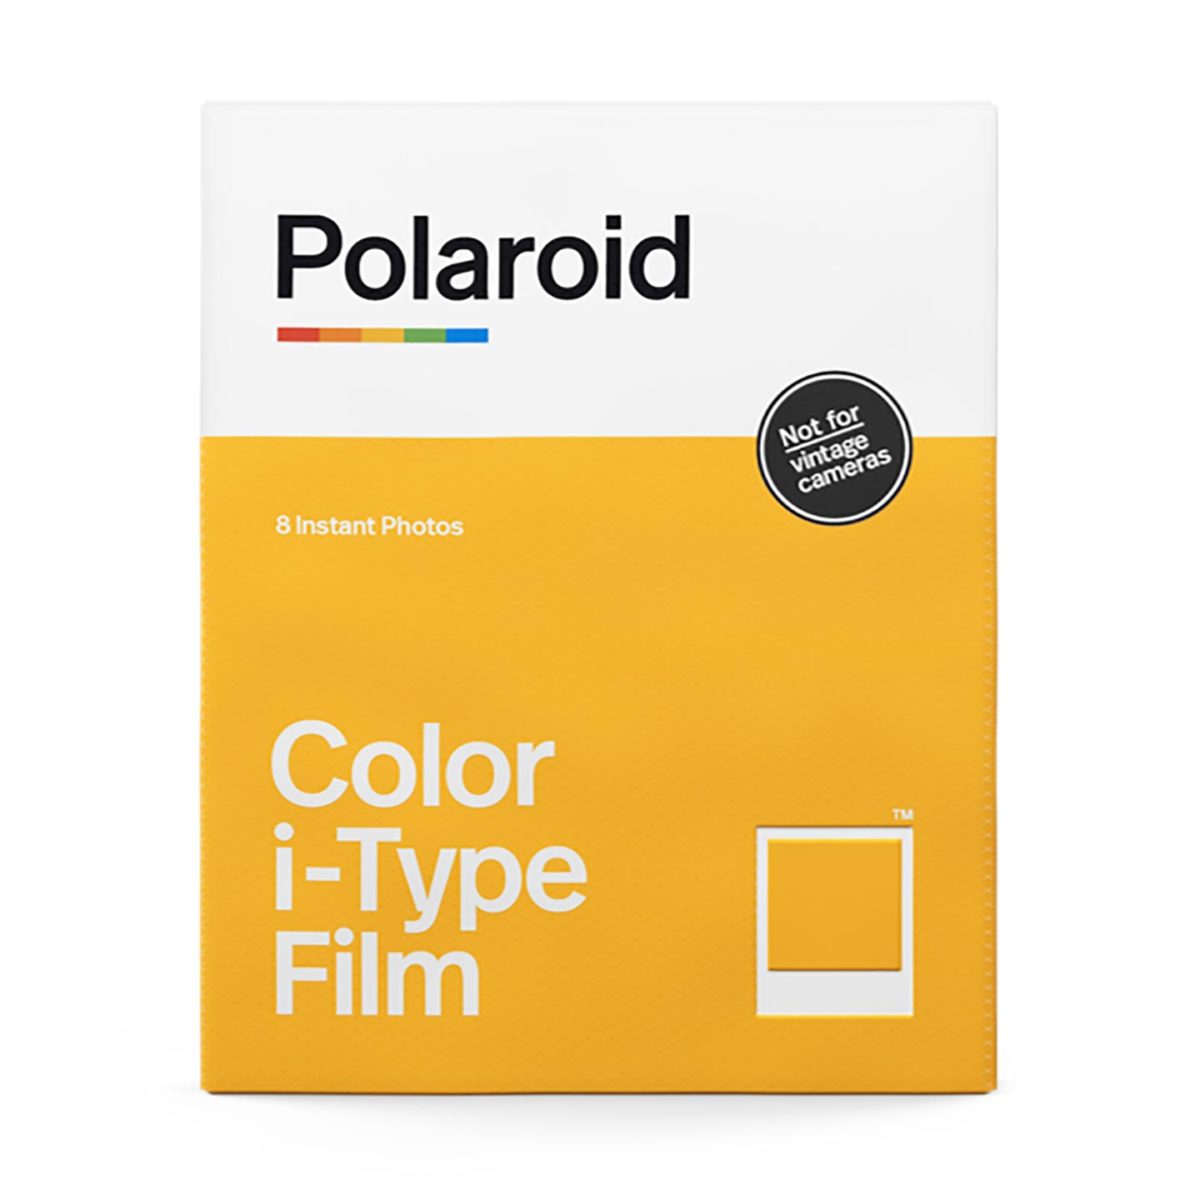 polaroid_i_type_color_film_02